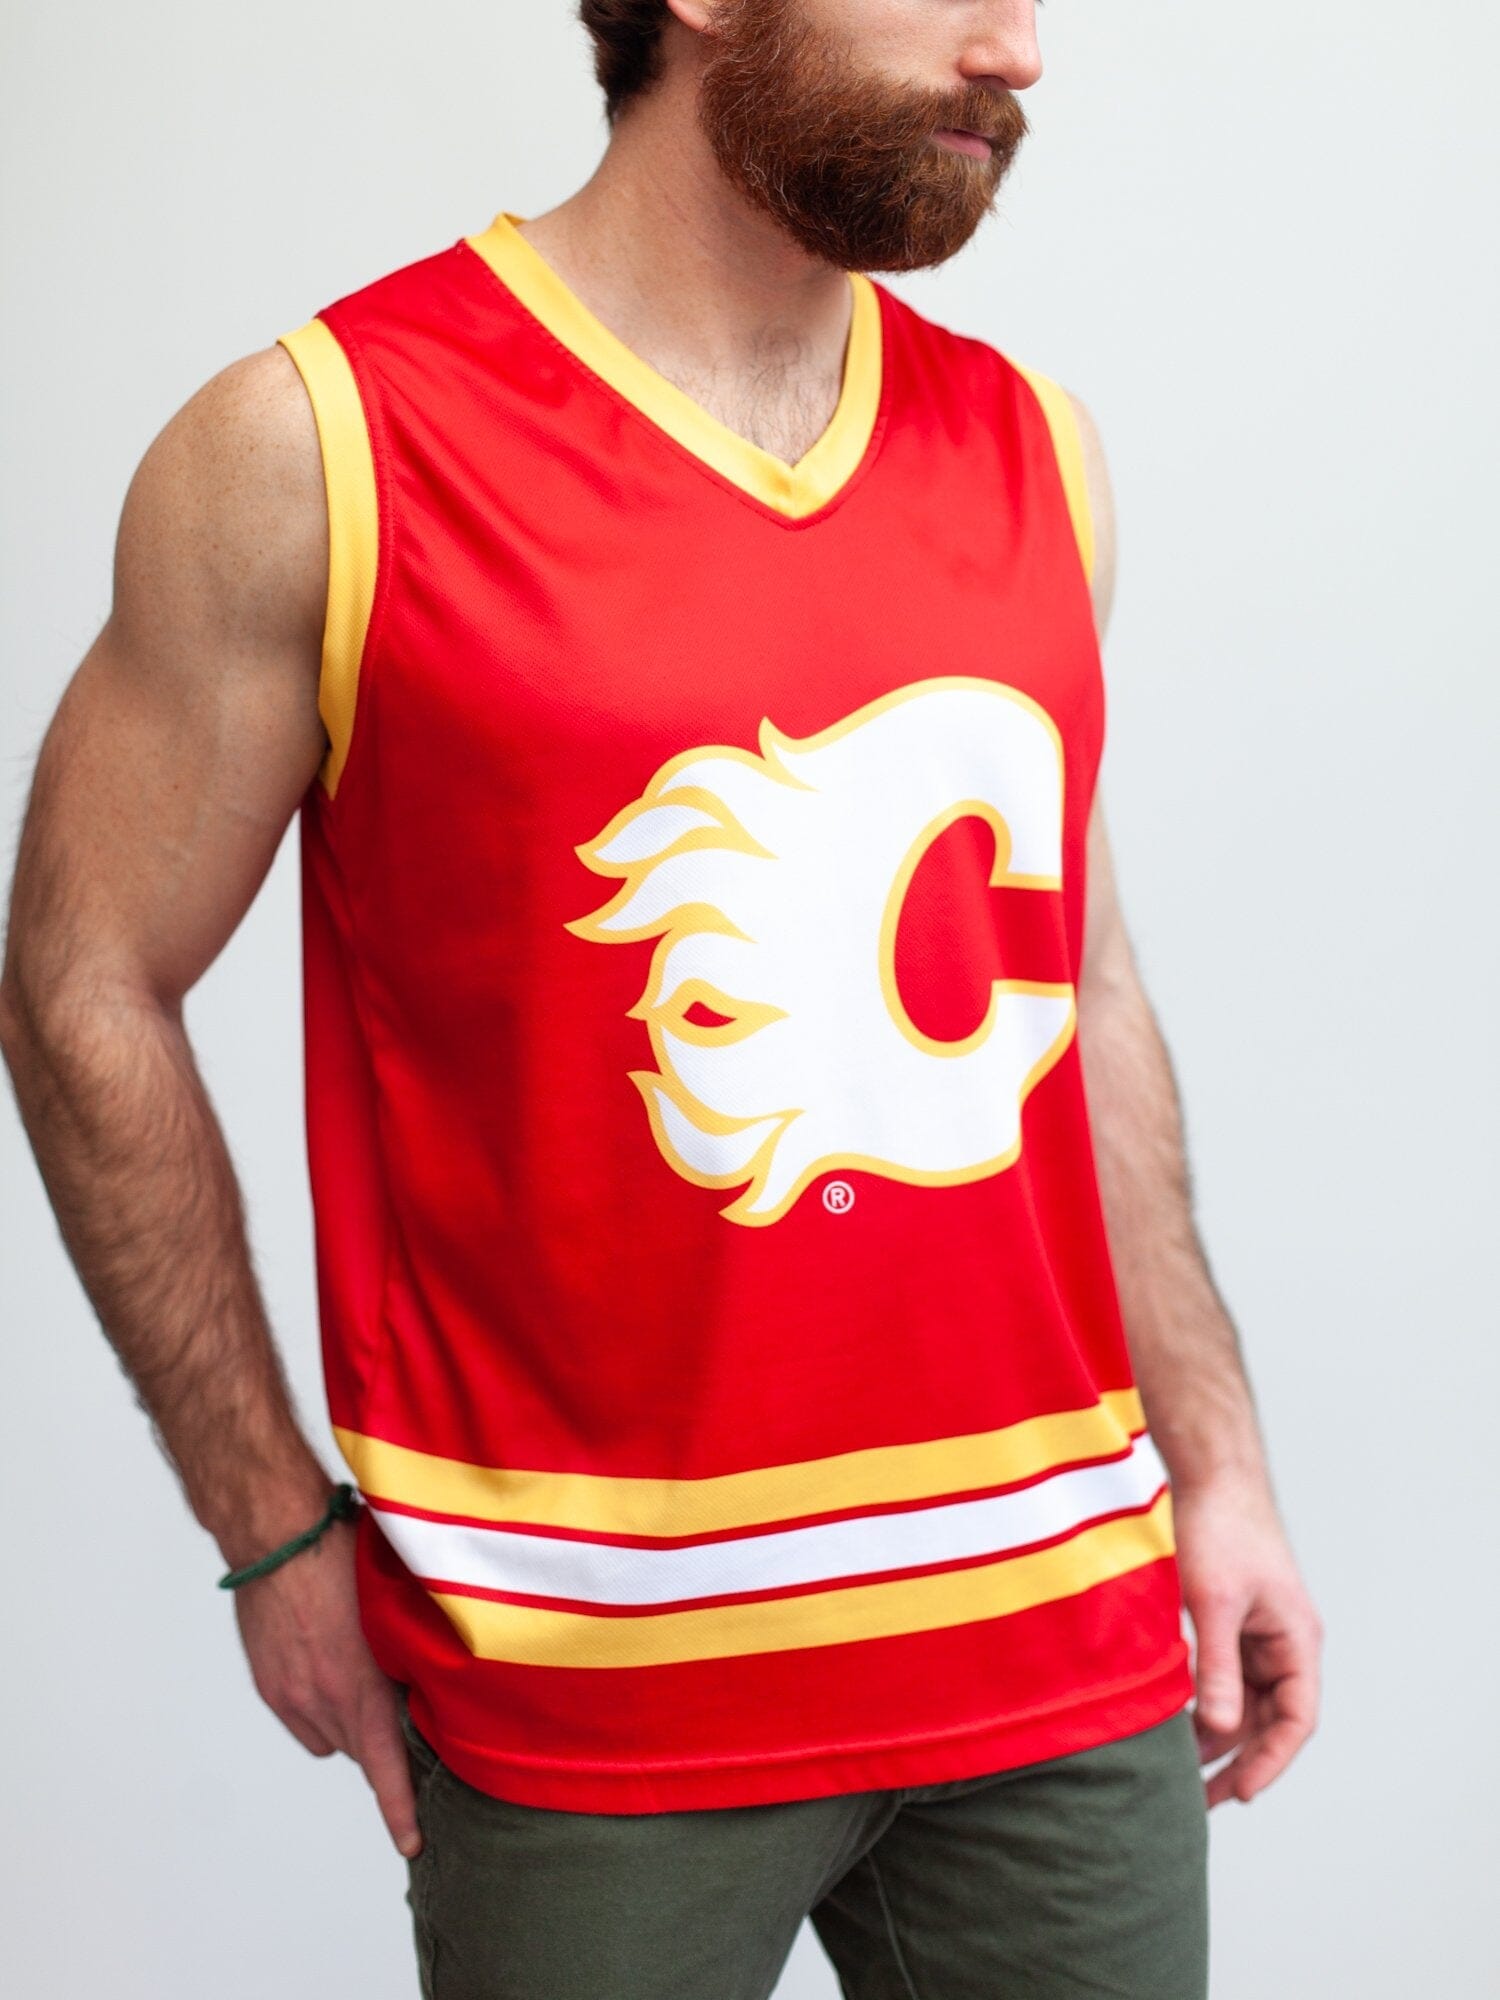 flames alternate jersey